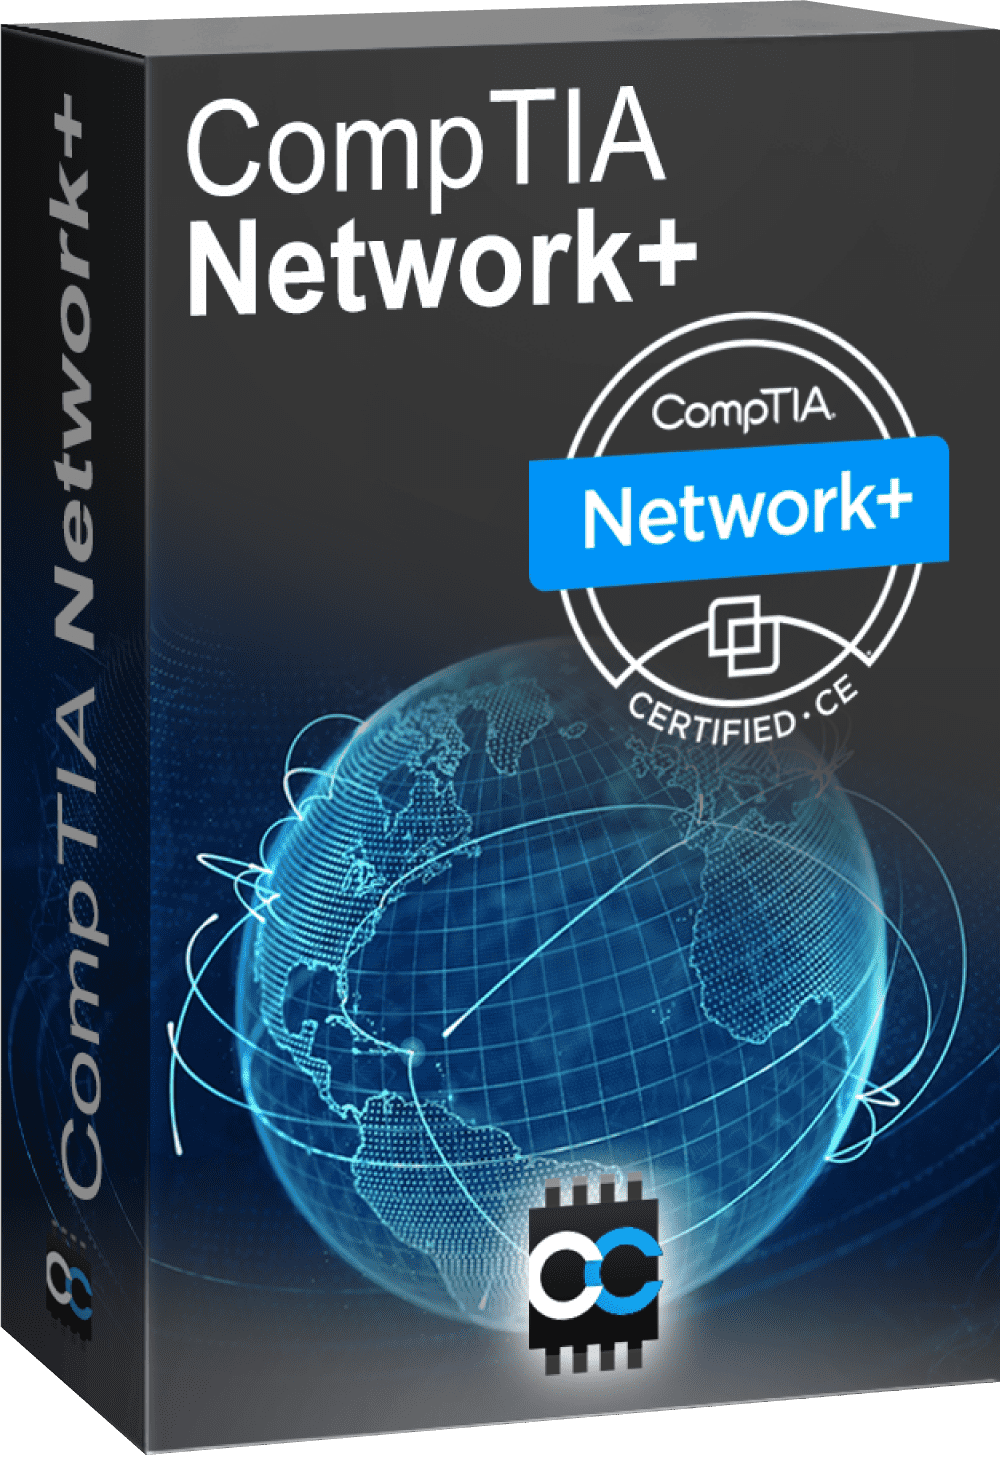 network+